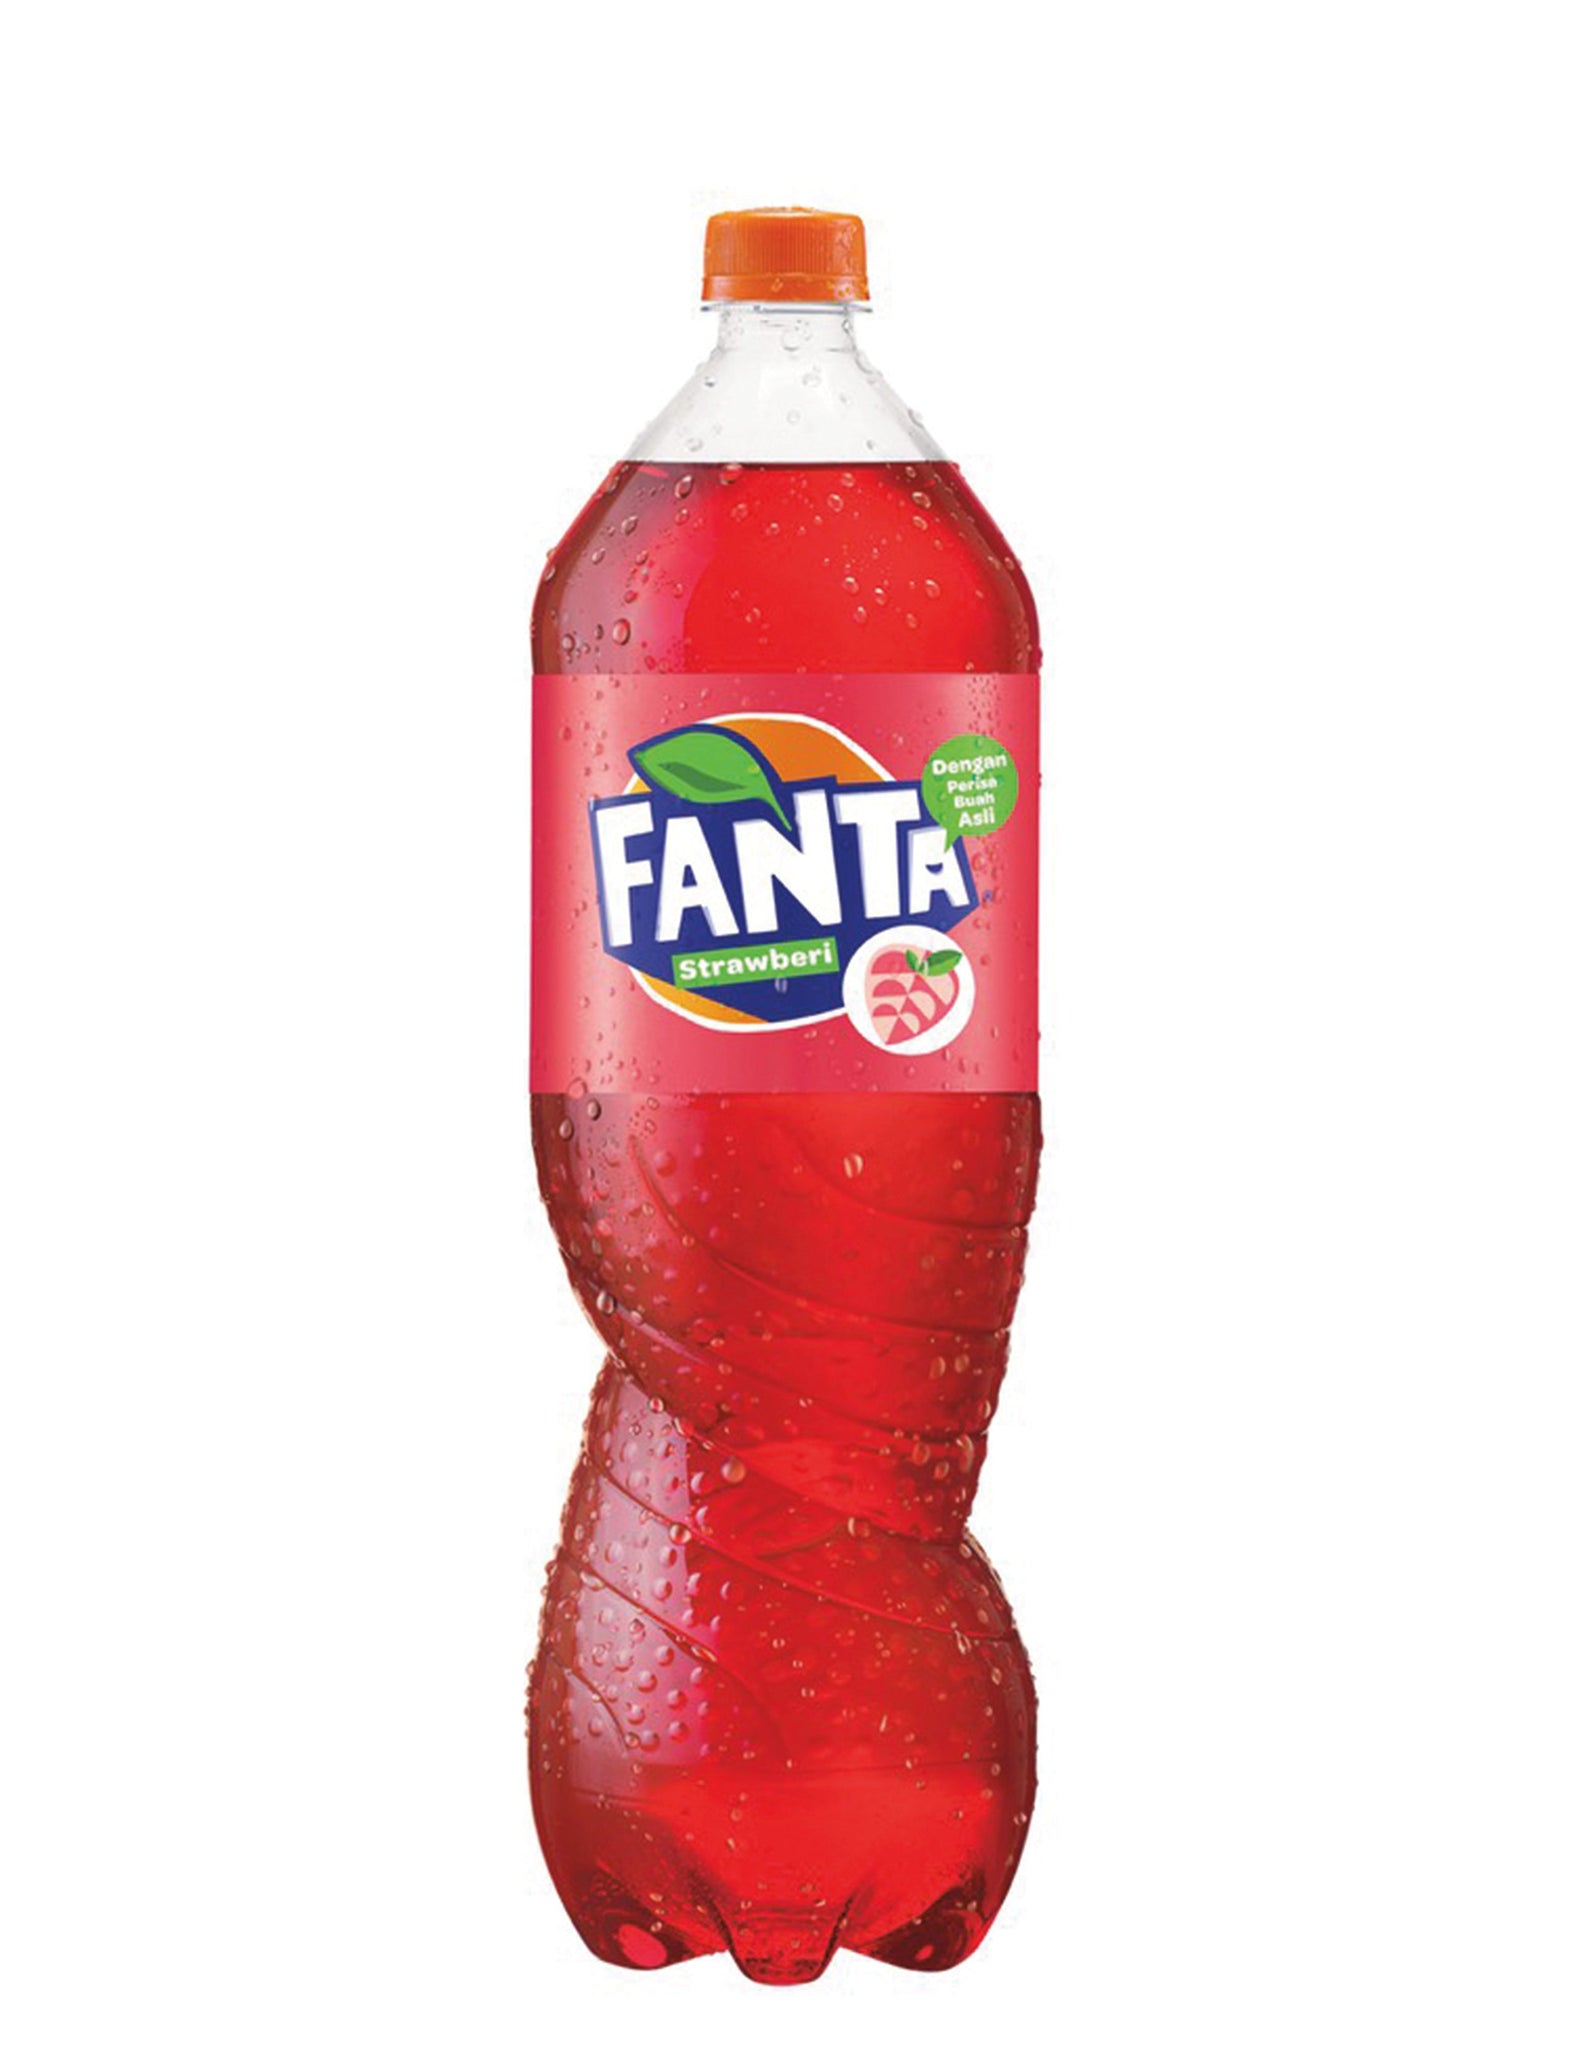 tha>Fanta strawberry 1.25 litre bottle